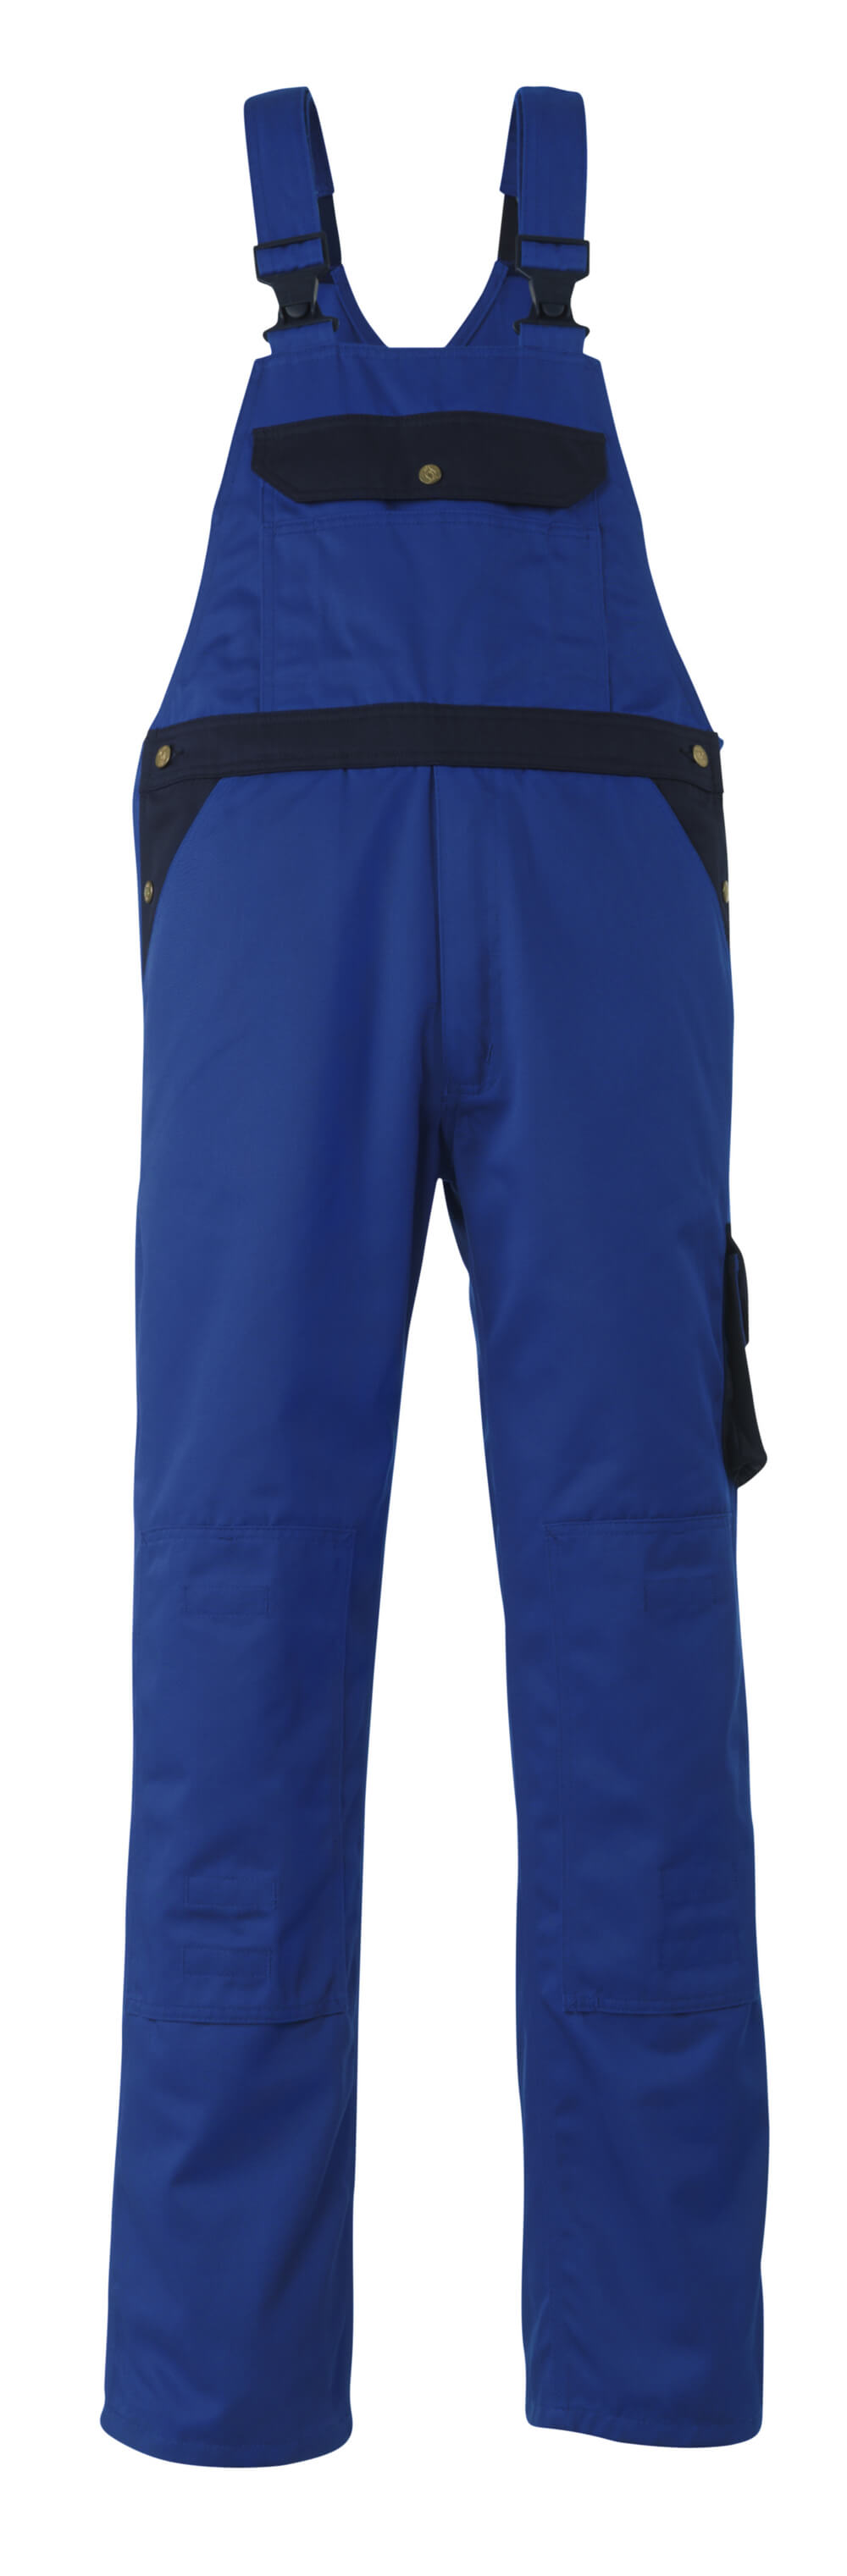 00969-430-1101 Amerikaanse overall met kniezakken - korenblauw/marine